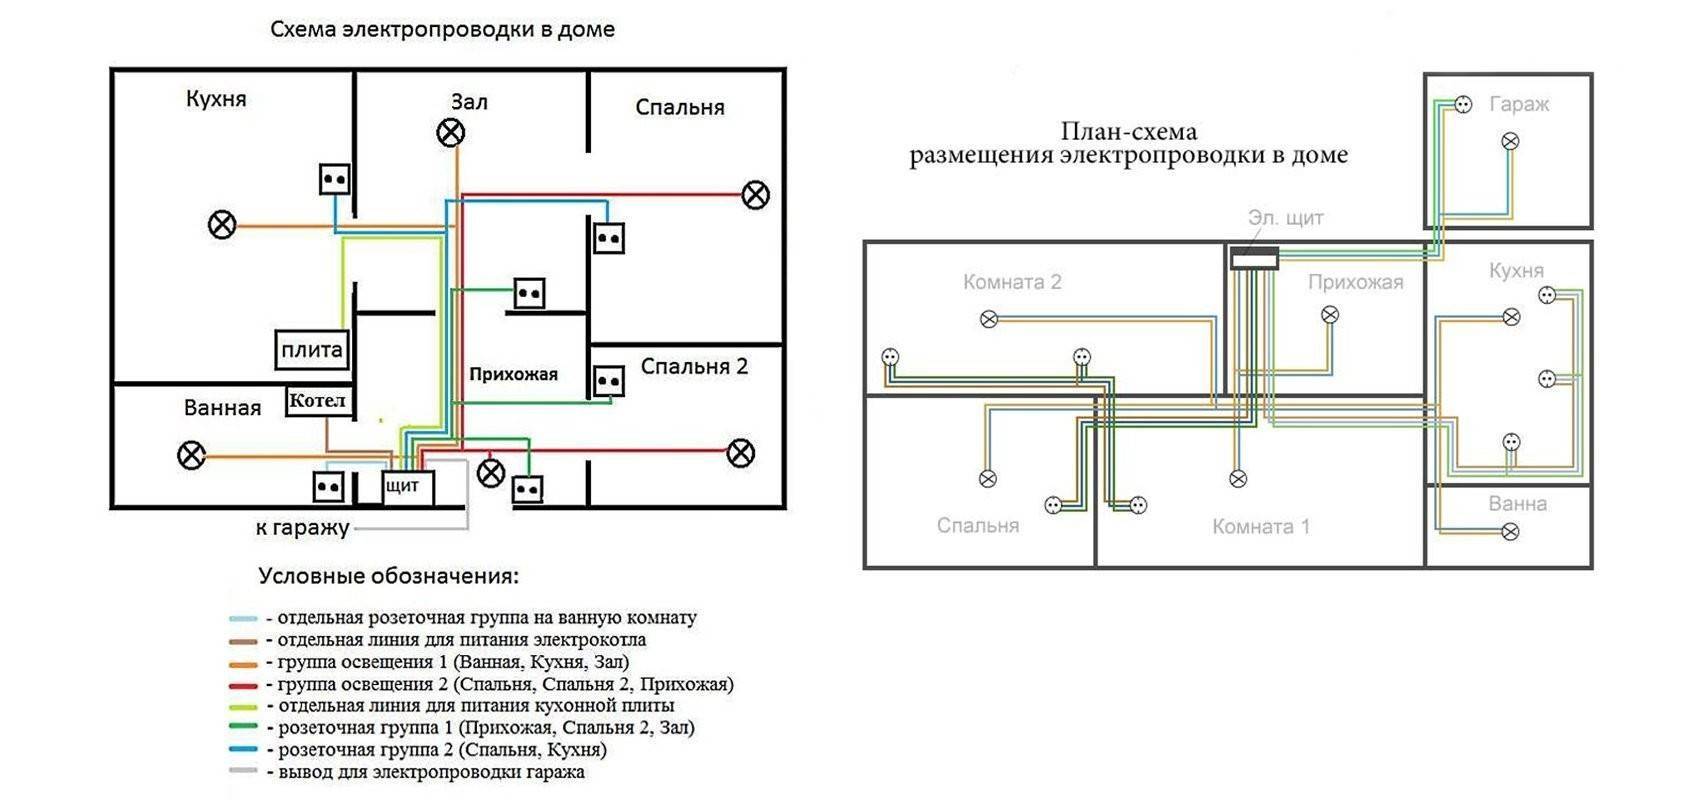 Разводка электропроводки в квартире: схема, фото, видео рекомендации как сделать разводку электропроводки своими руками